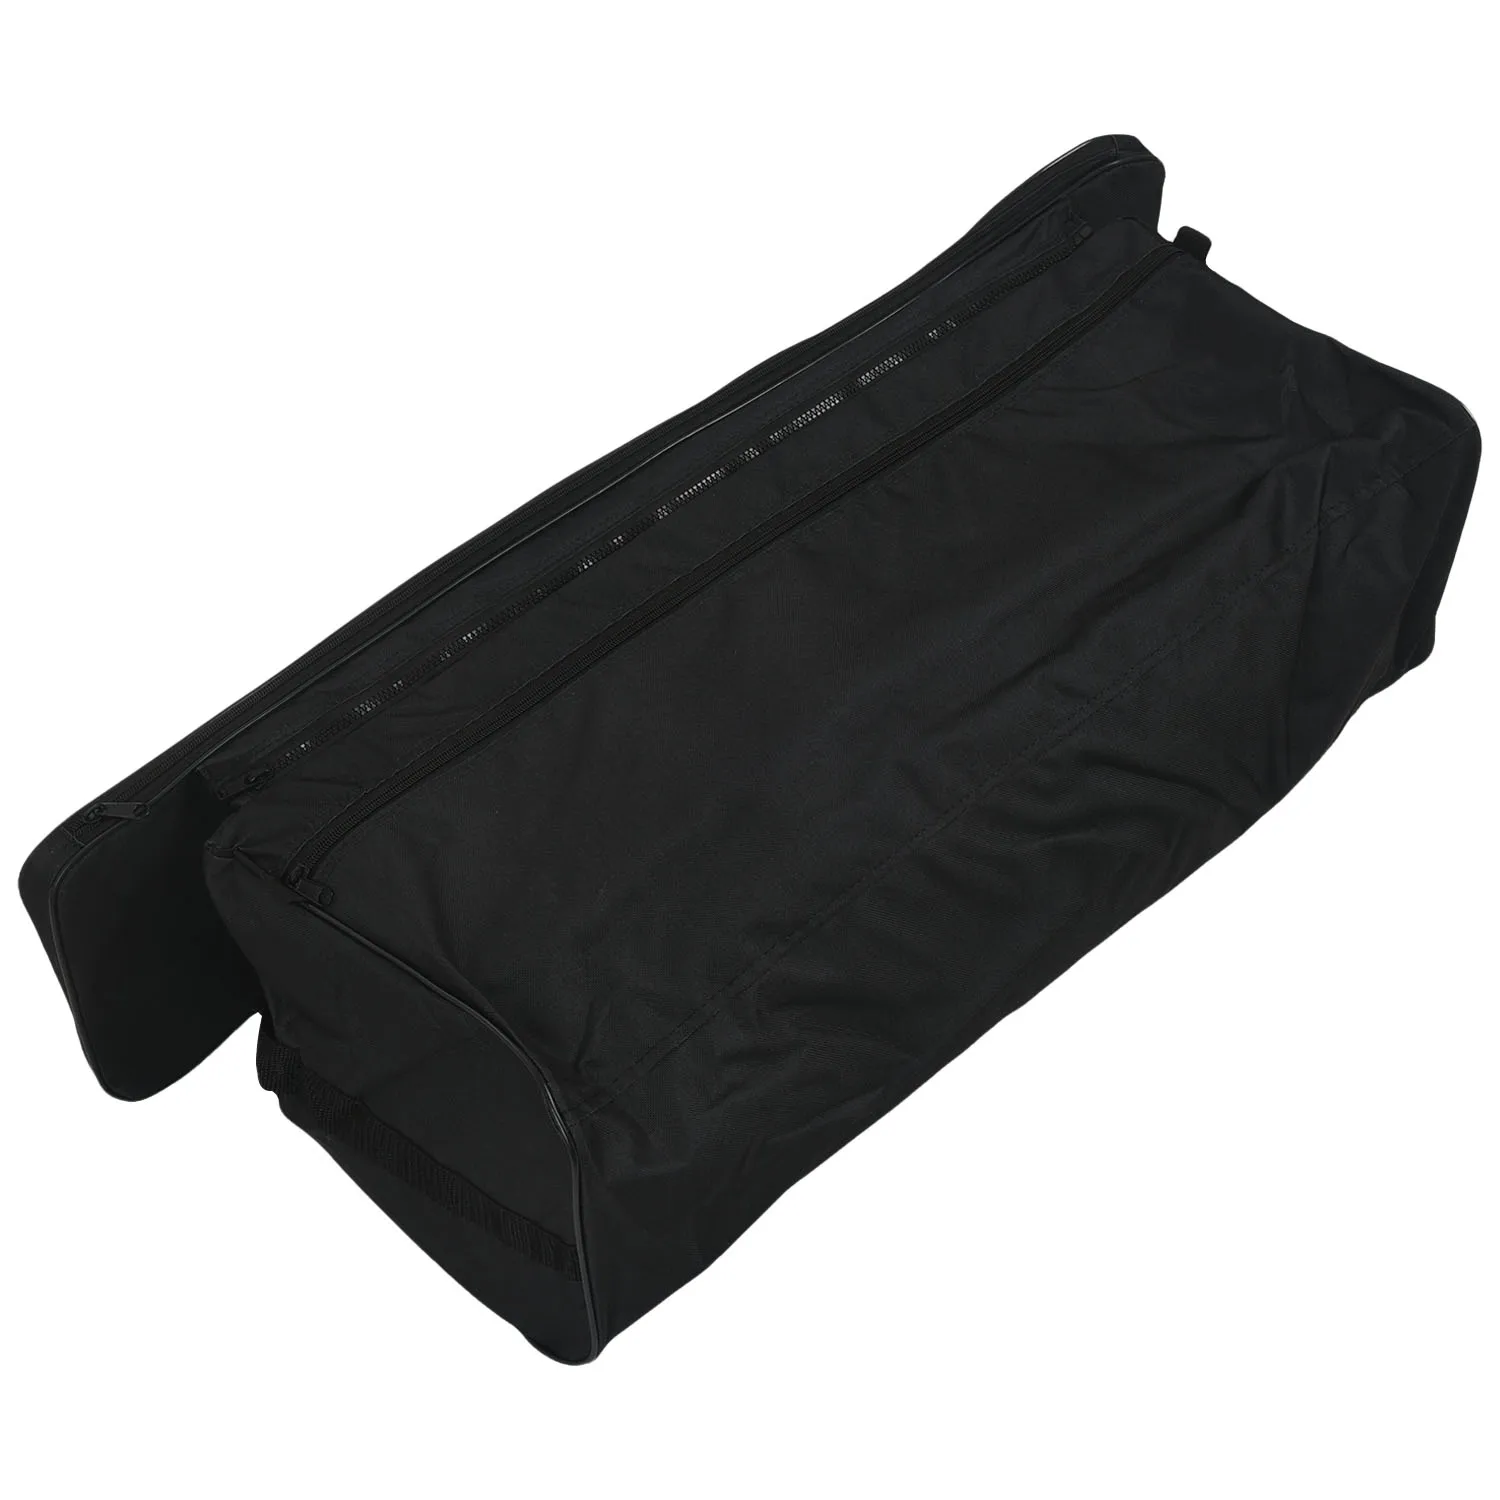 

Надувная сумка для хранения в виде каноэ, лодки с мягкой подушкой